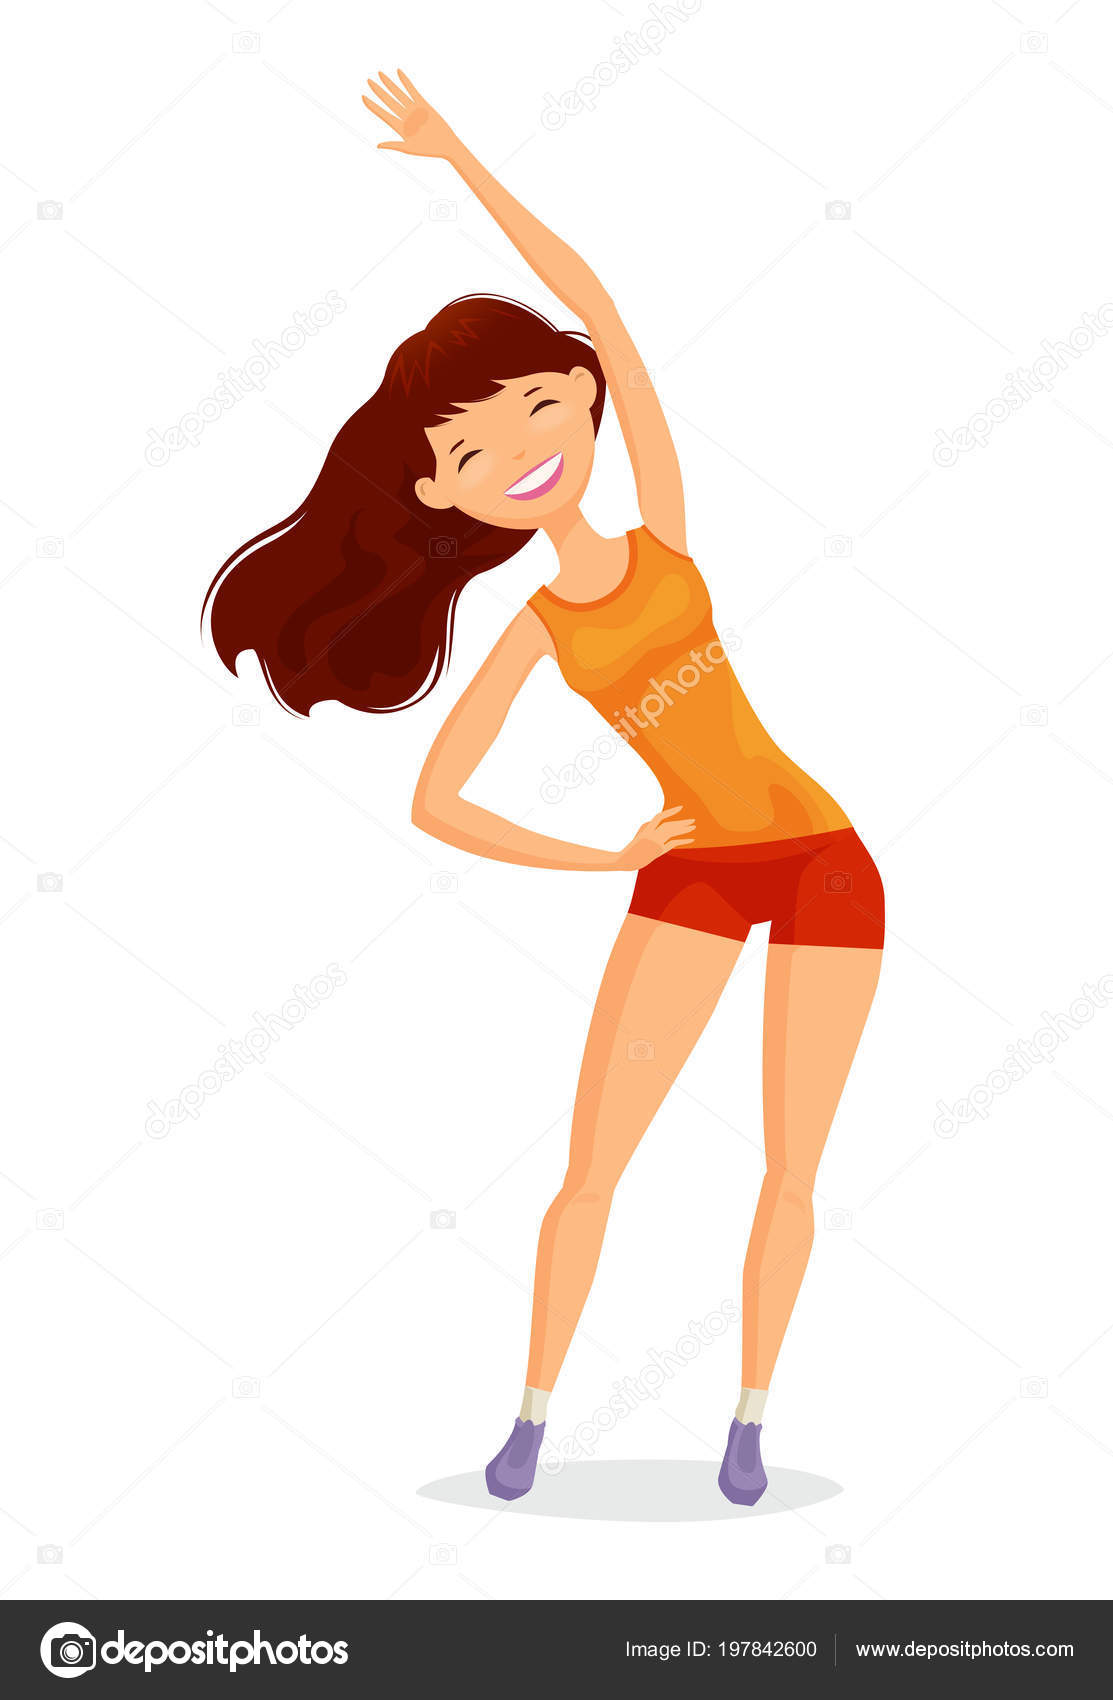 https://st4.depositphotos.com/1496387/19784/v/1600/depositphotos_197842600-stock-illustration-fitness-sport-cartoon-girl-young.jpg